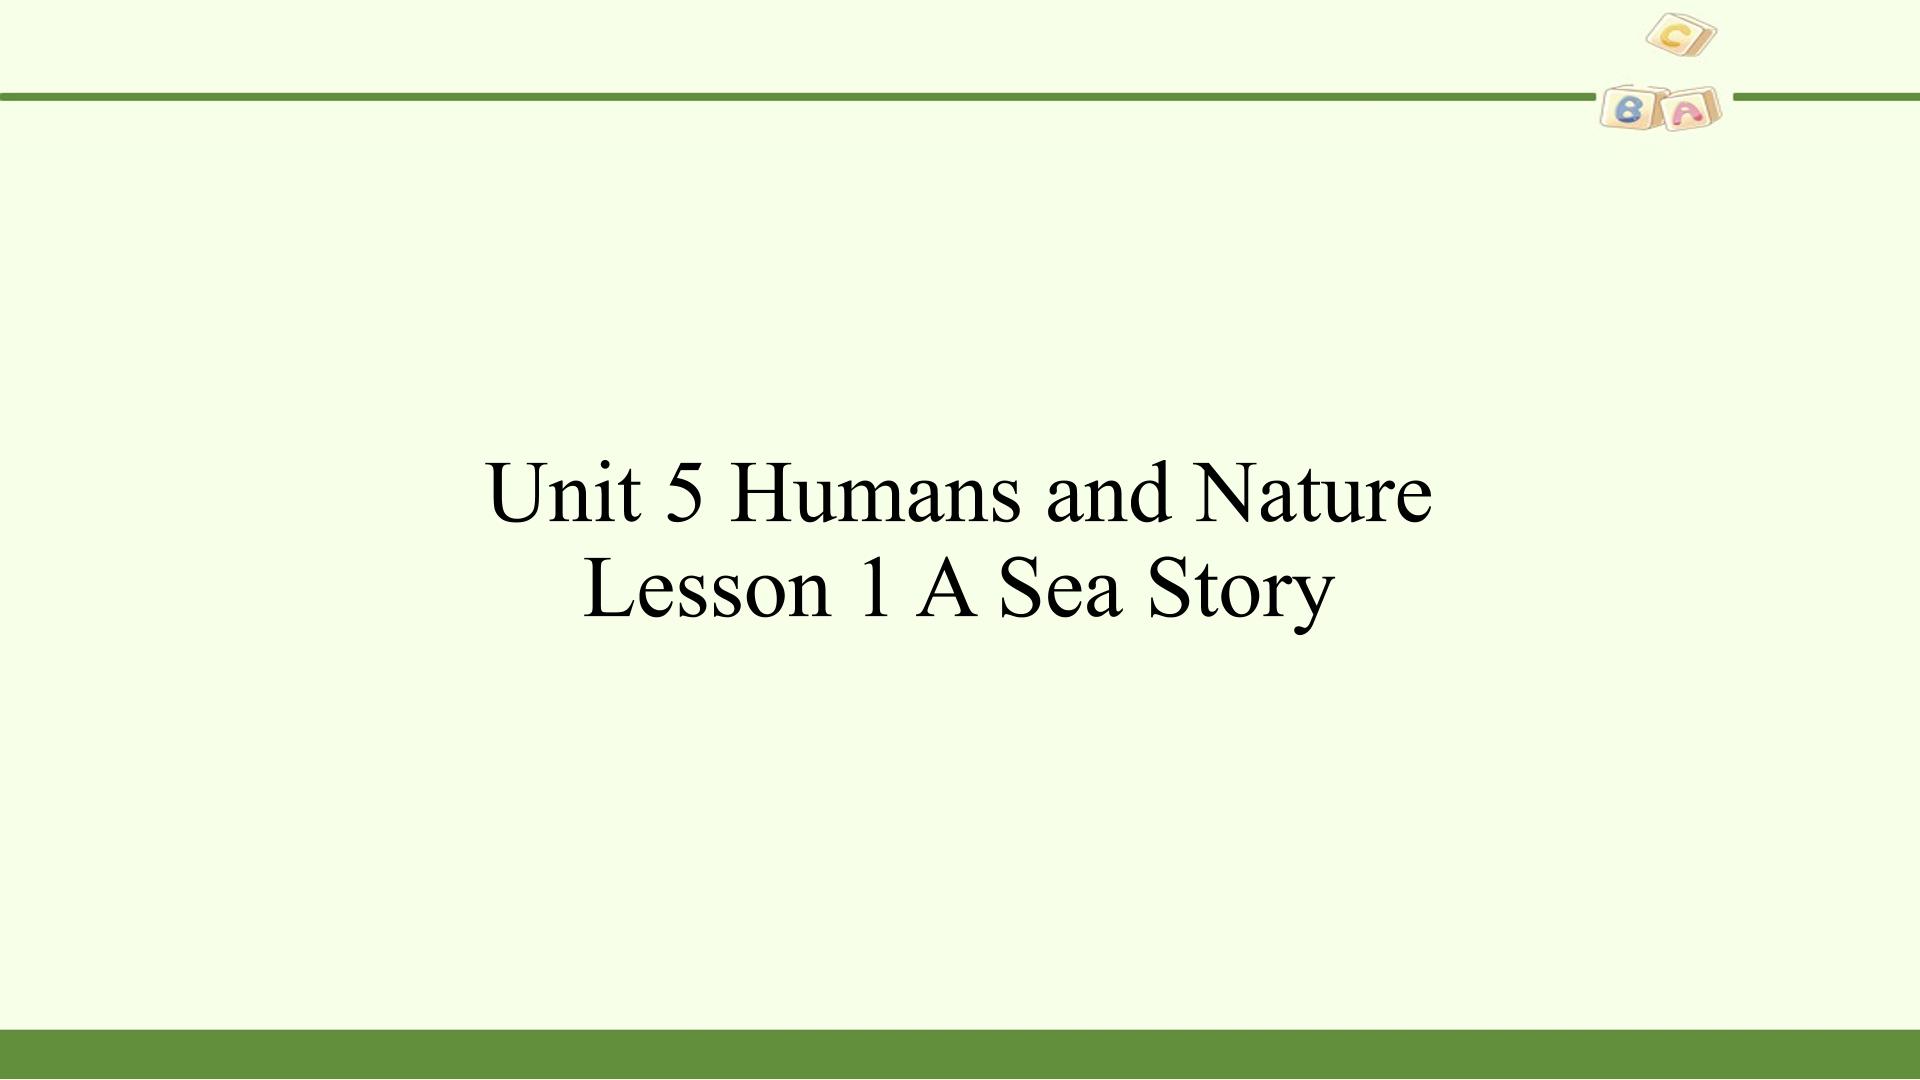 Lesson 1 A Sea Story